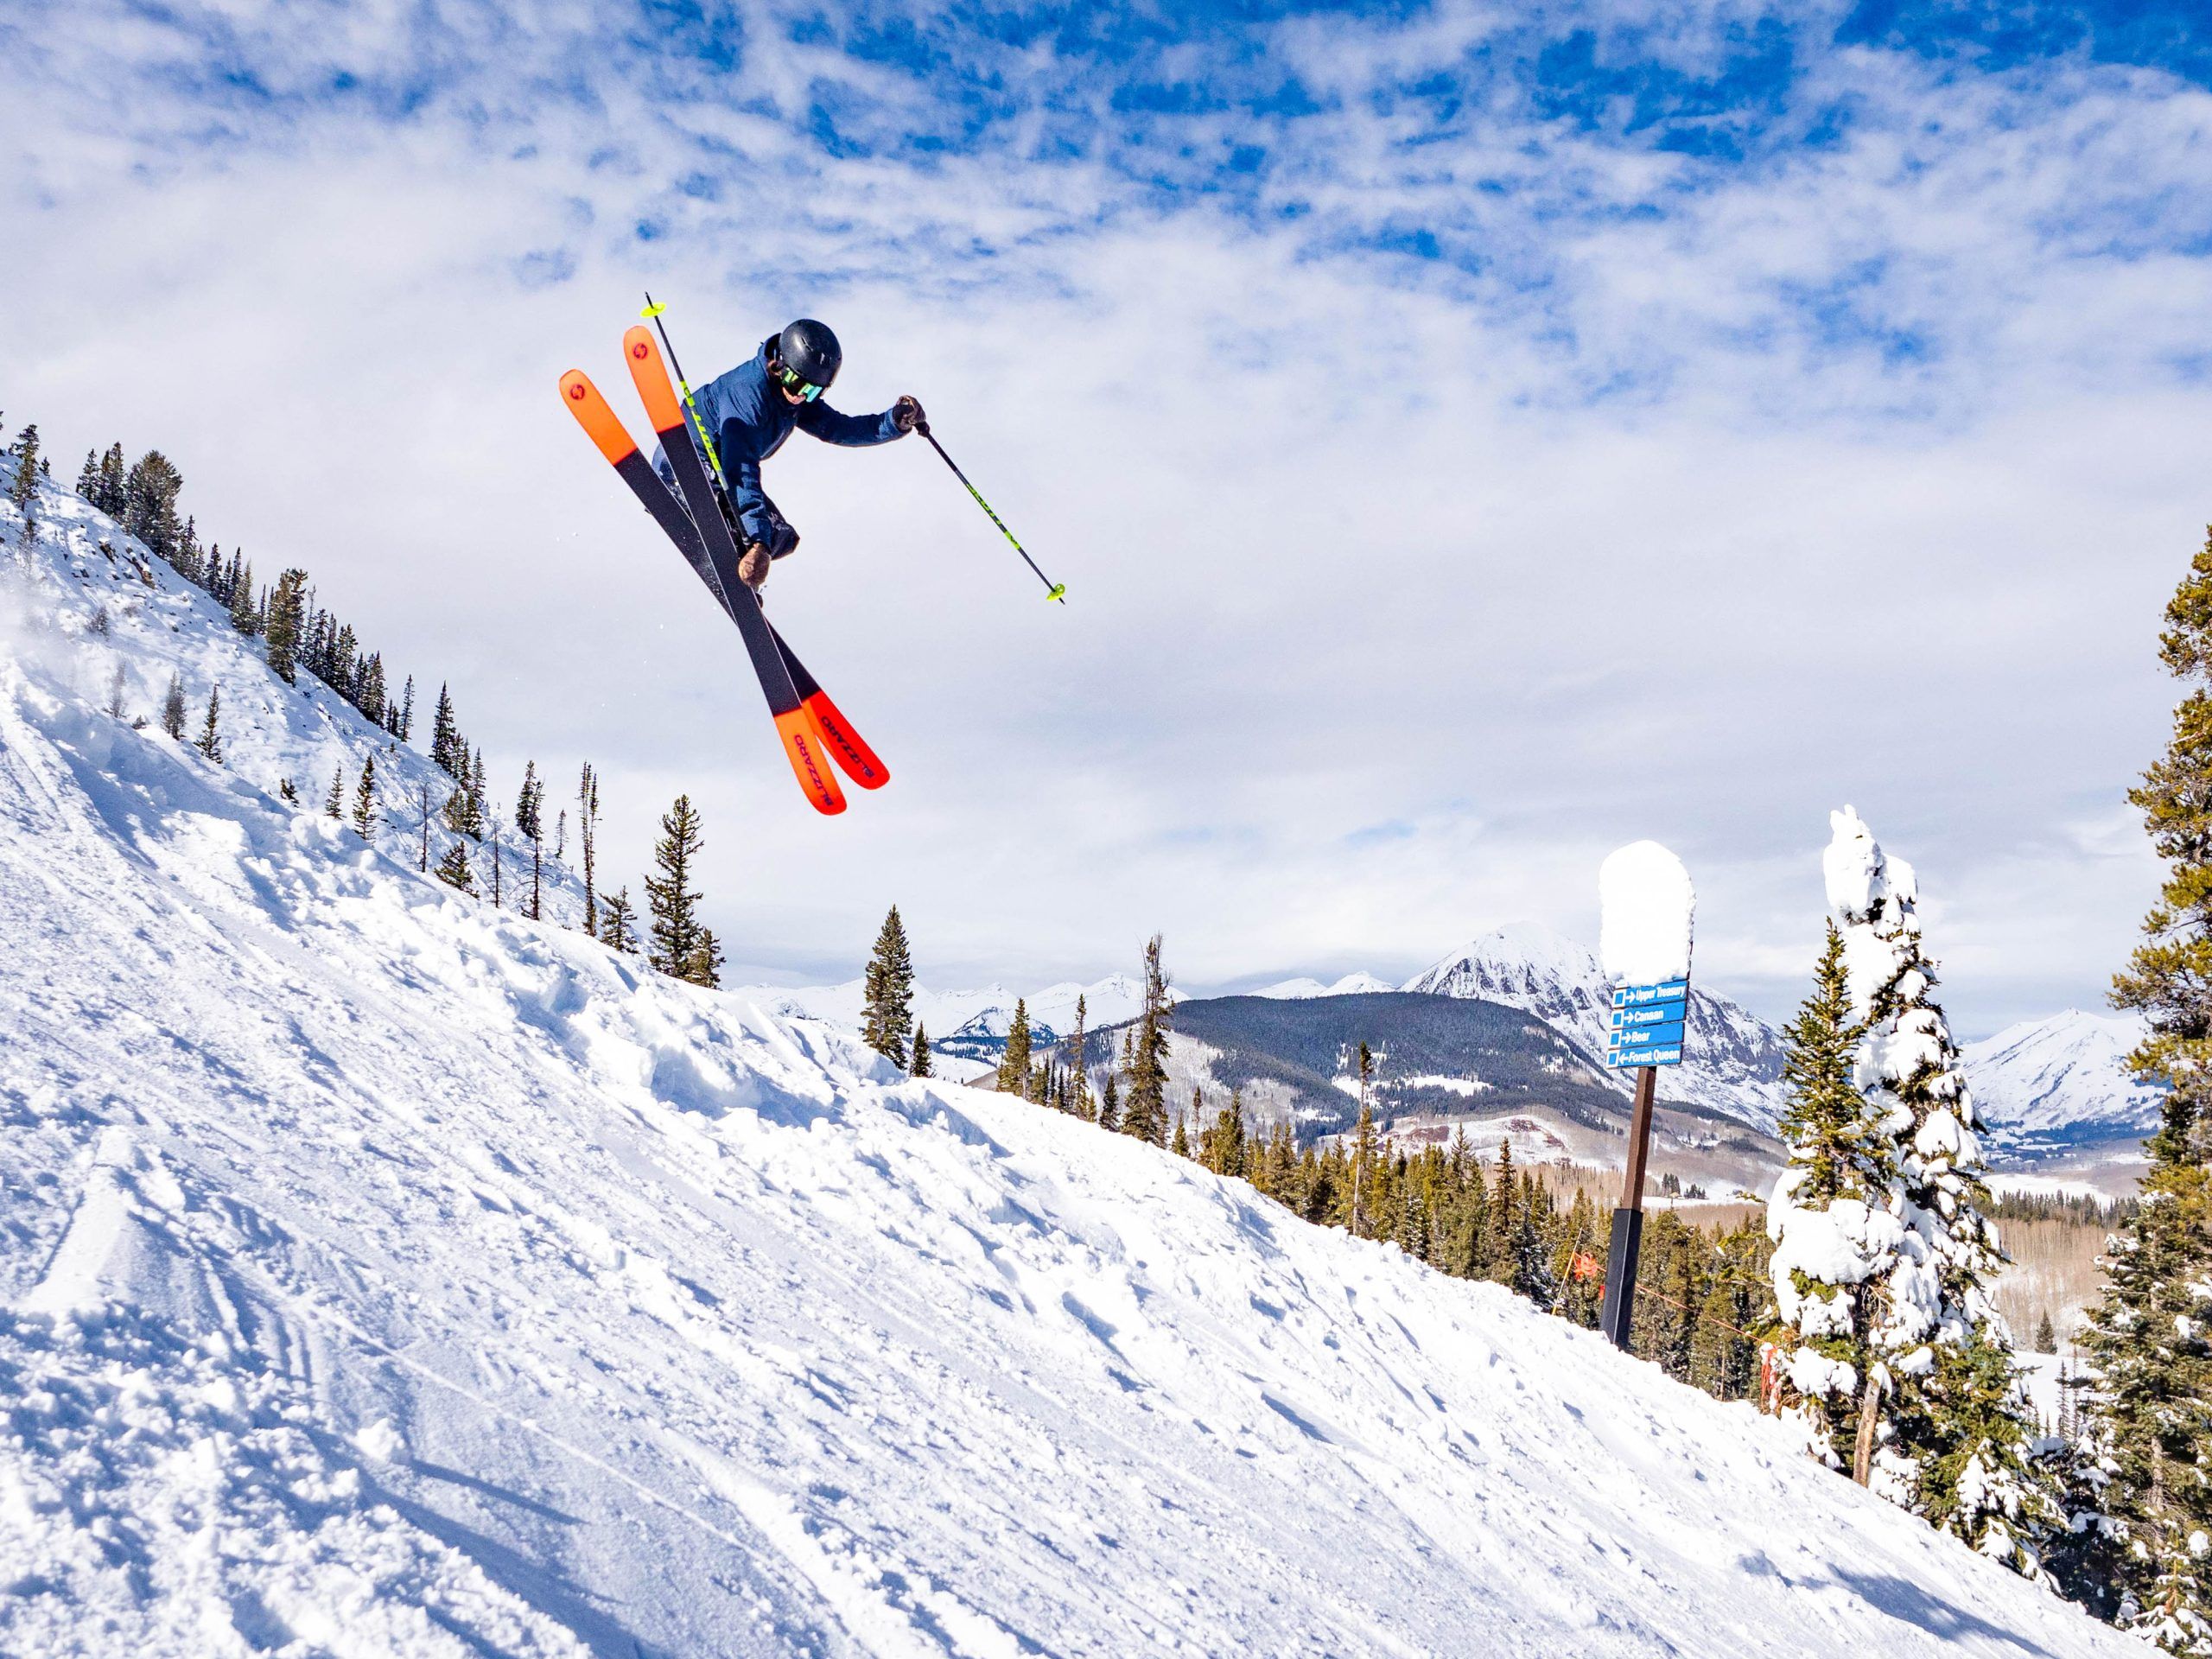 A skier jumps on a steep run